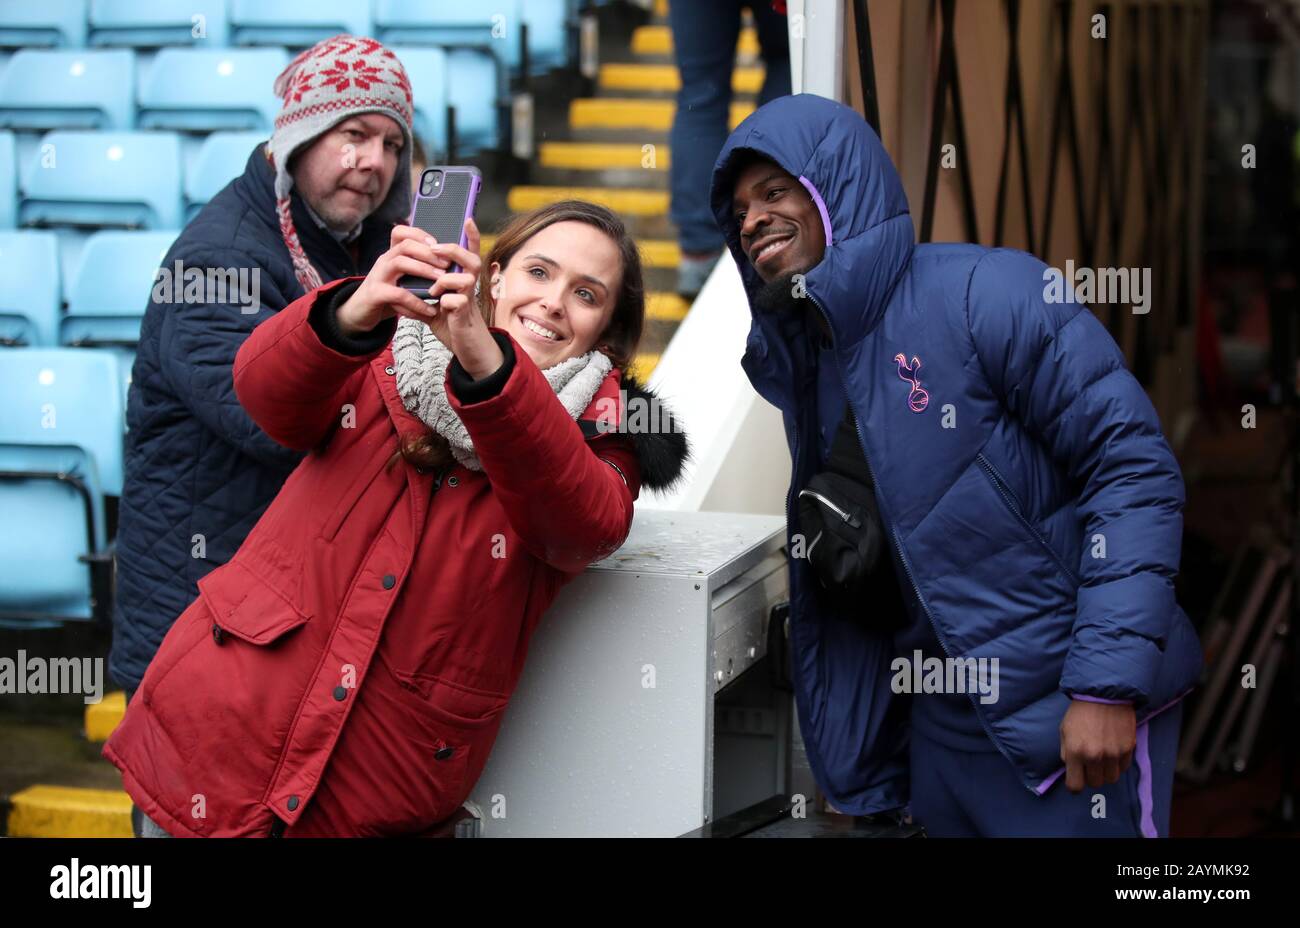 Tottenham Hotspur's Serge Aurier poses for a photo with a fan prior to the Premier League match at Villa Park, Birmingham. Stock Photo